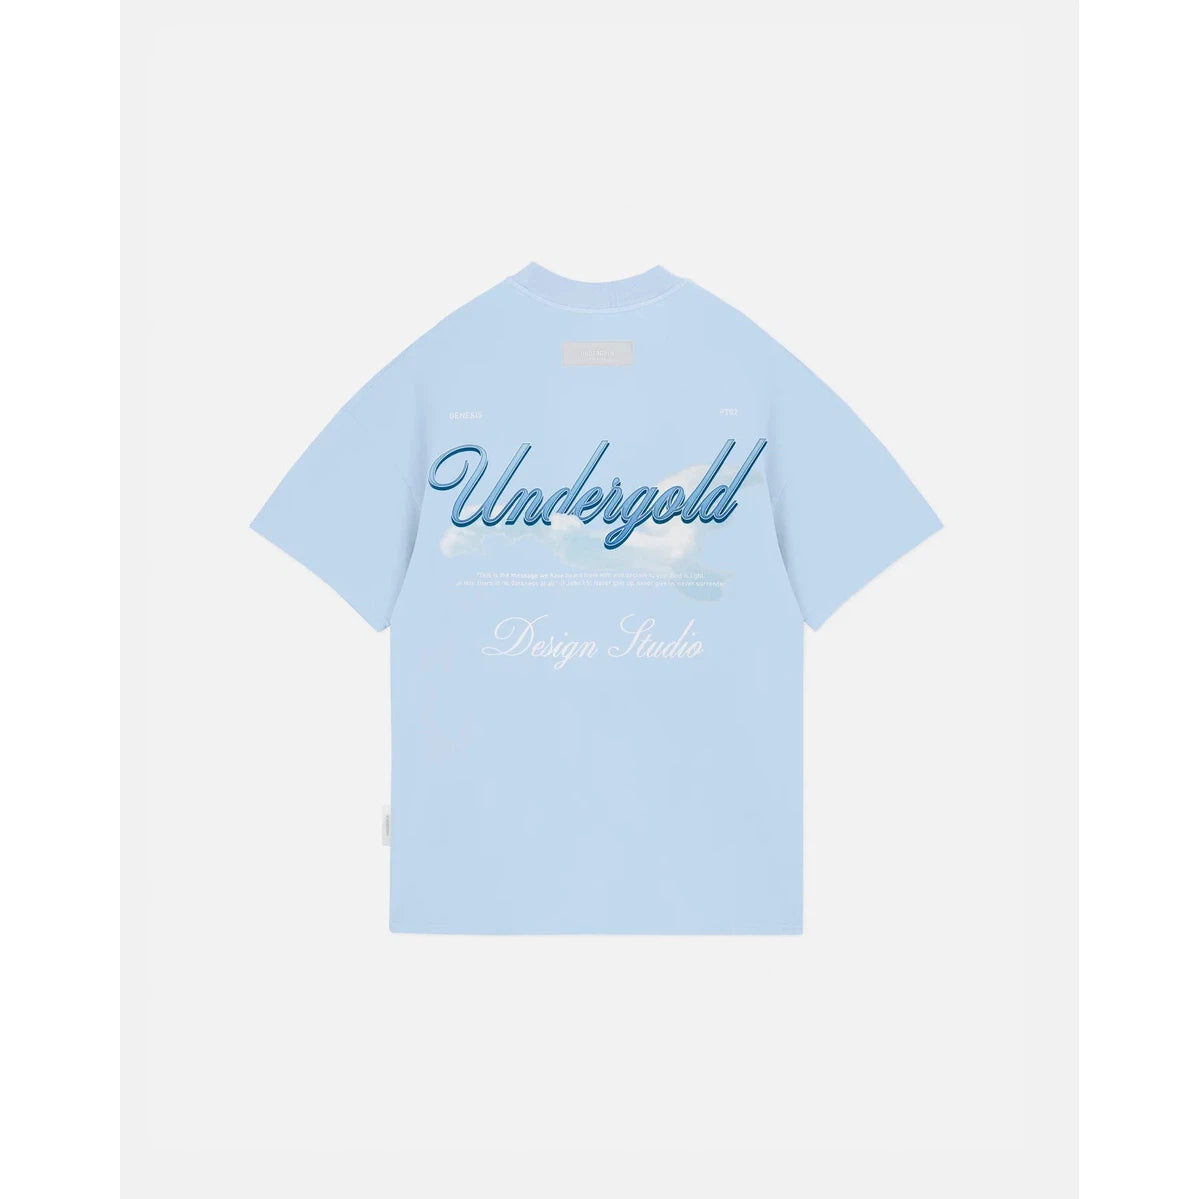 Undergold Genesis PT02 Cloud Angel T-shirt Sky Blue